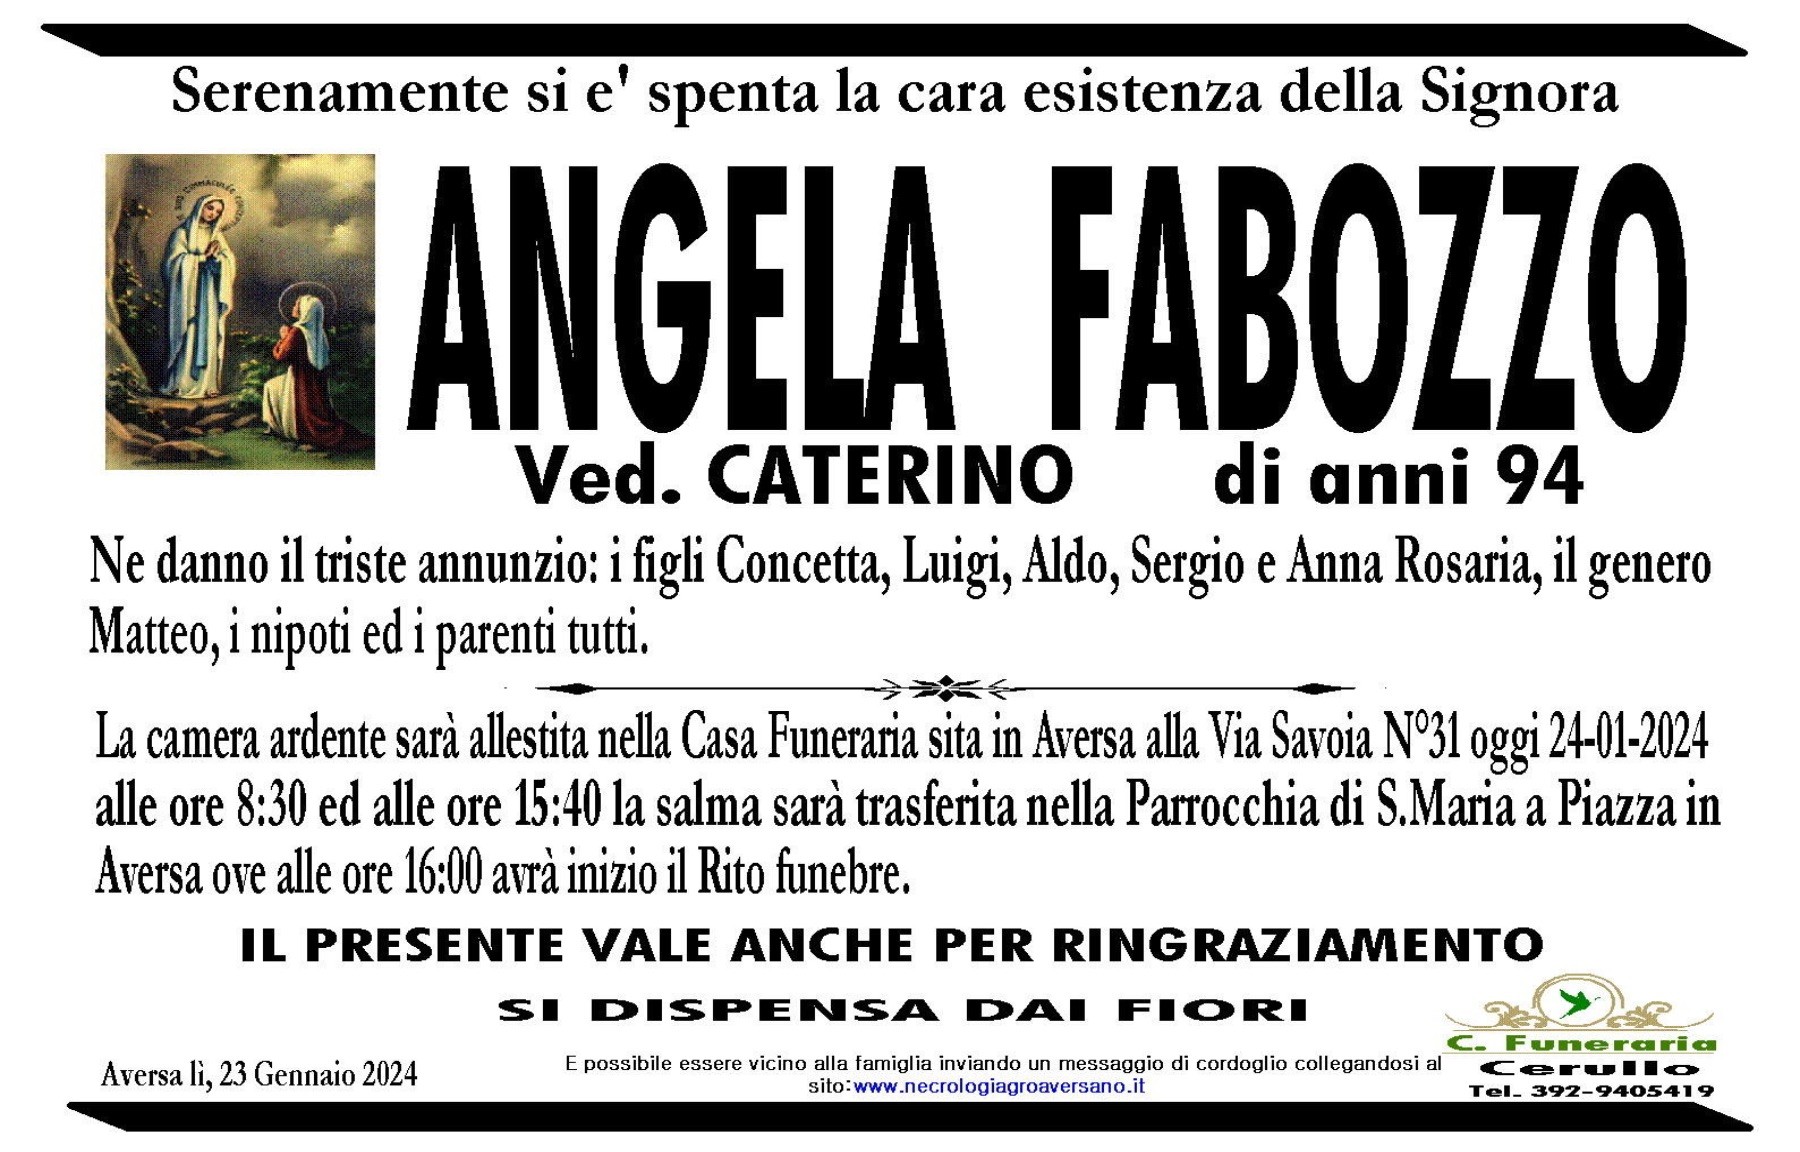 Angela Fabozzo